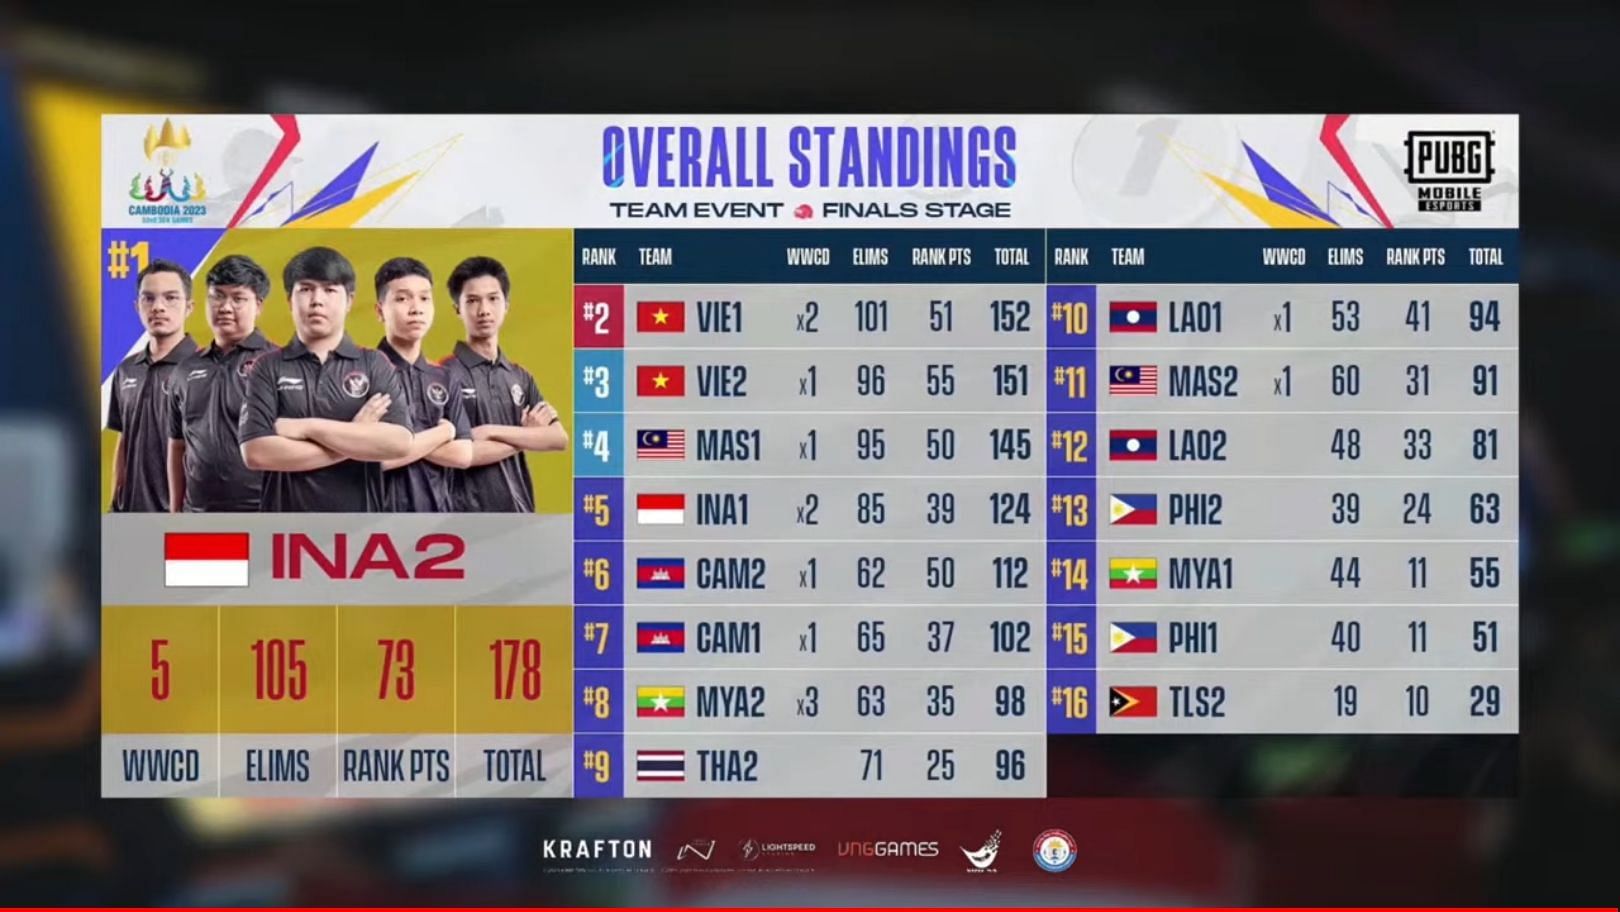 SEA Games Grand Finals overall standings (Image via PUBG Mobile)